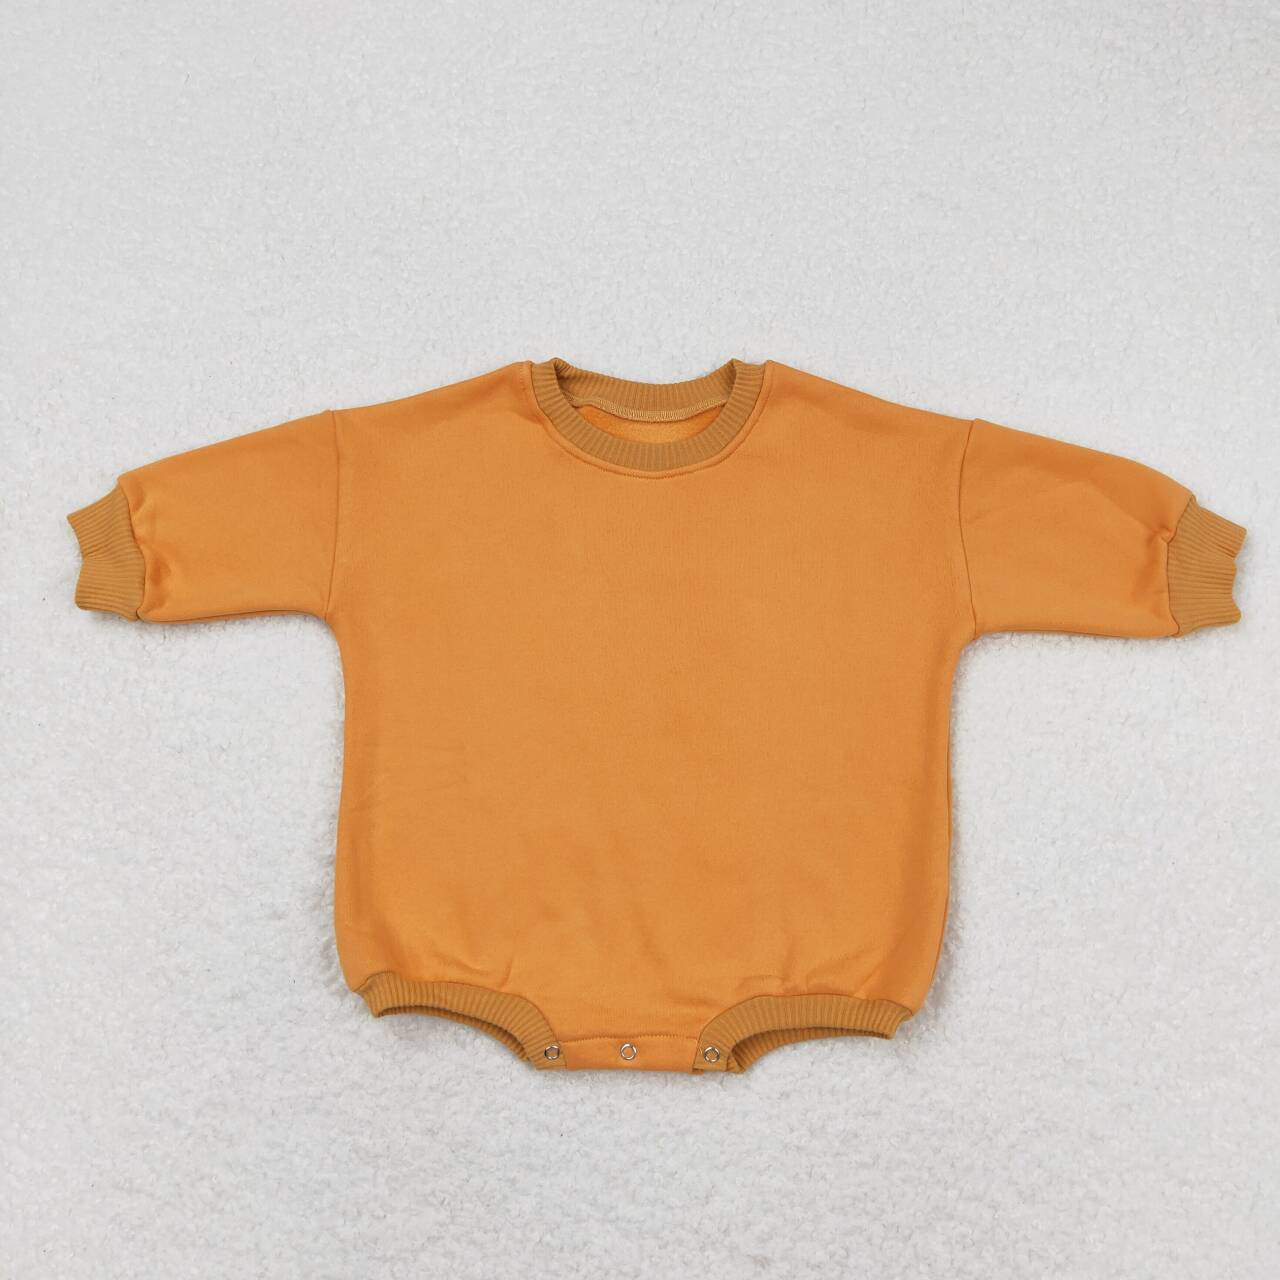 LR0953 Mustard Color Cotton Long Sleeve Baby Sweatshirt Romper